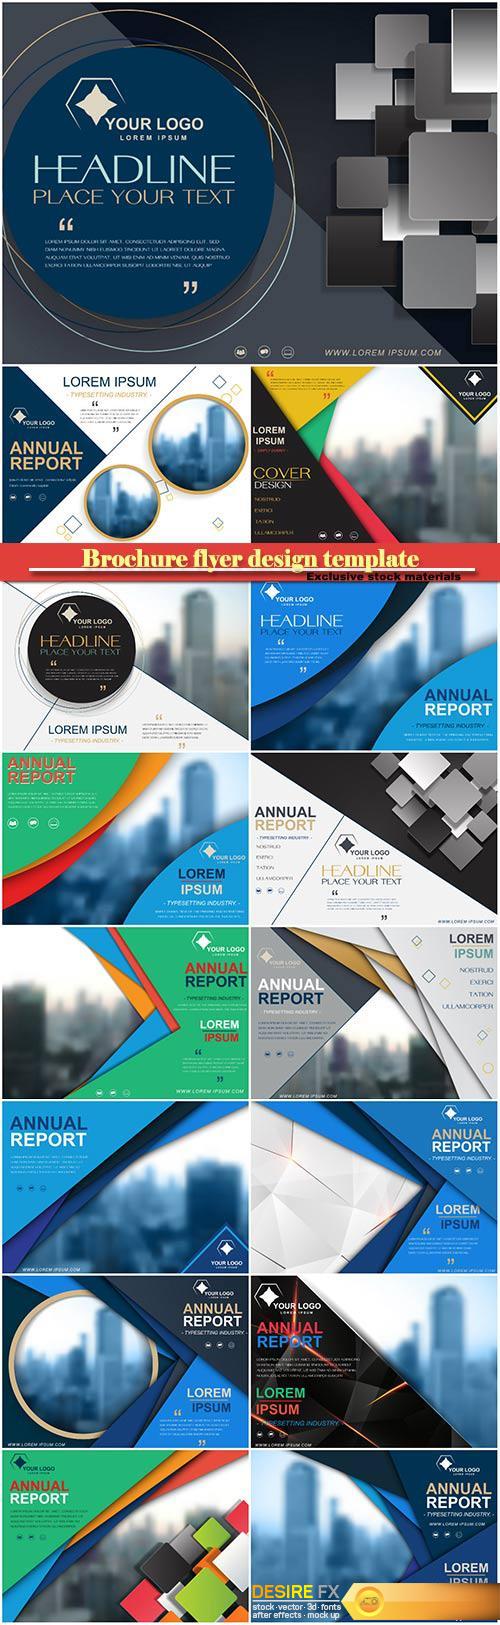 Brochure flyer design template vector, cover presentation